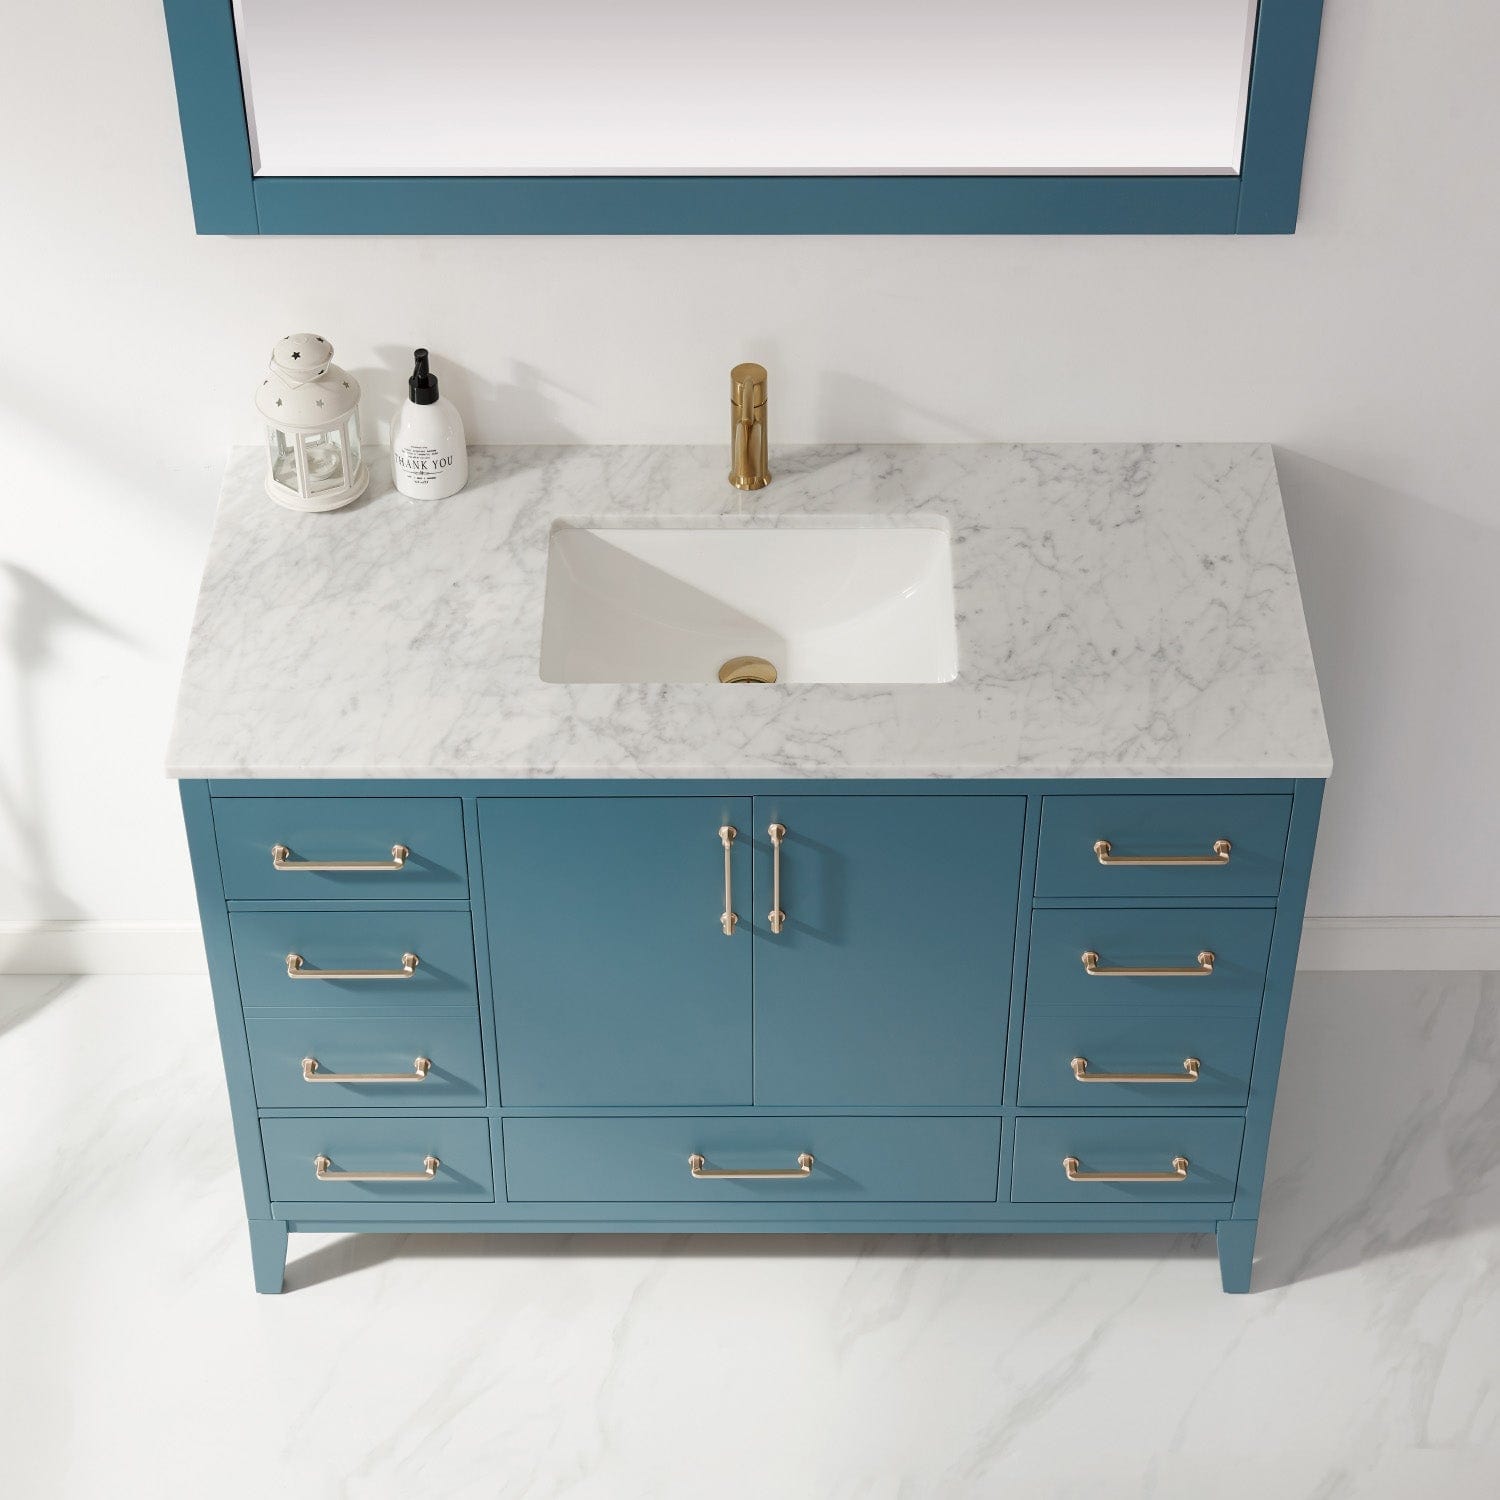 Altair Sutton 48" Single Bathroom Vanity Set in Royal Green and Carrara White Marble Countertop with Mirror 541048-RG-CA - Molaix631112971898Vanity541048-RG-CA